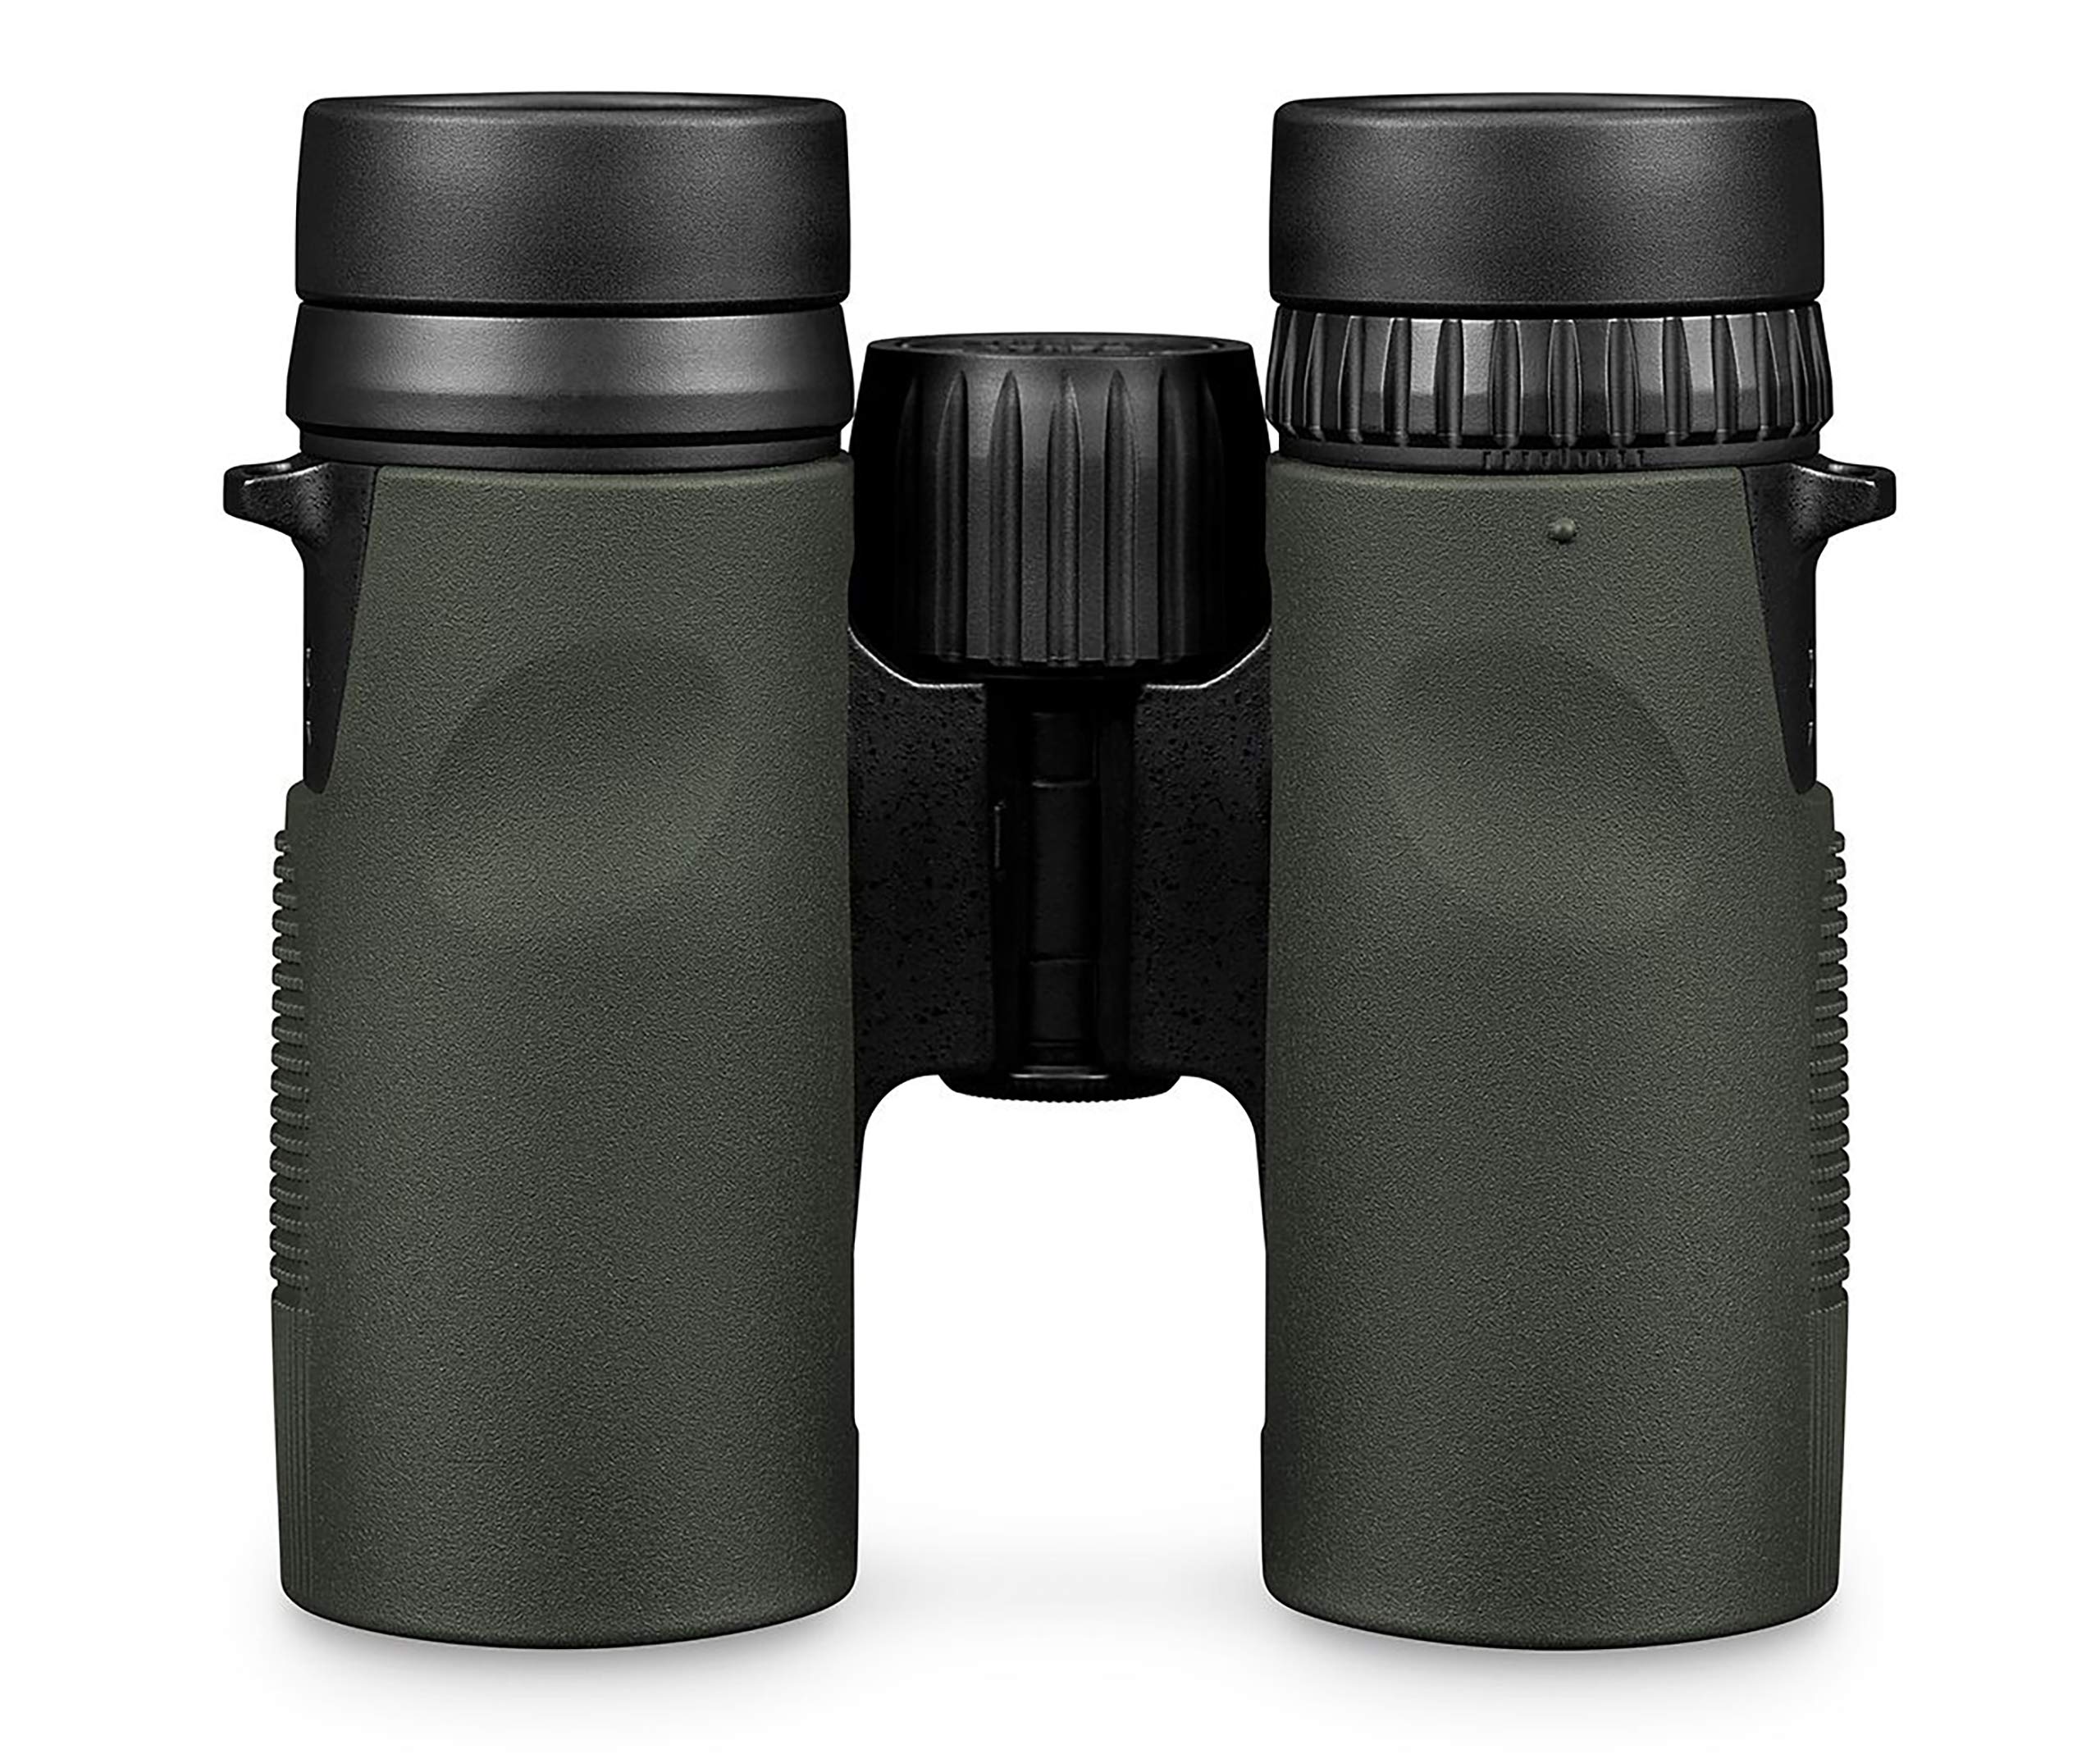 Vortex Optics Diamondback HD 8x32 Binoculars